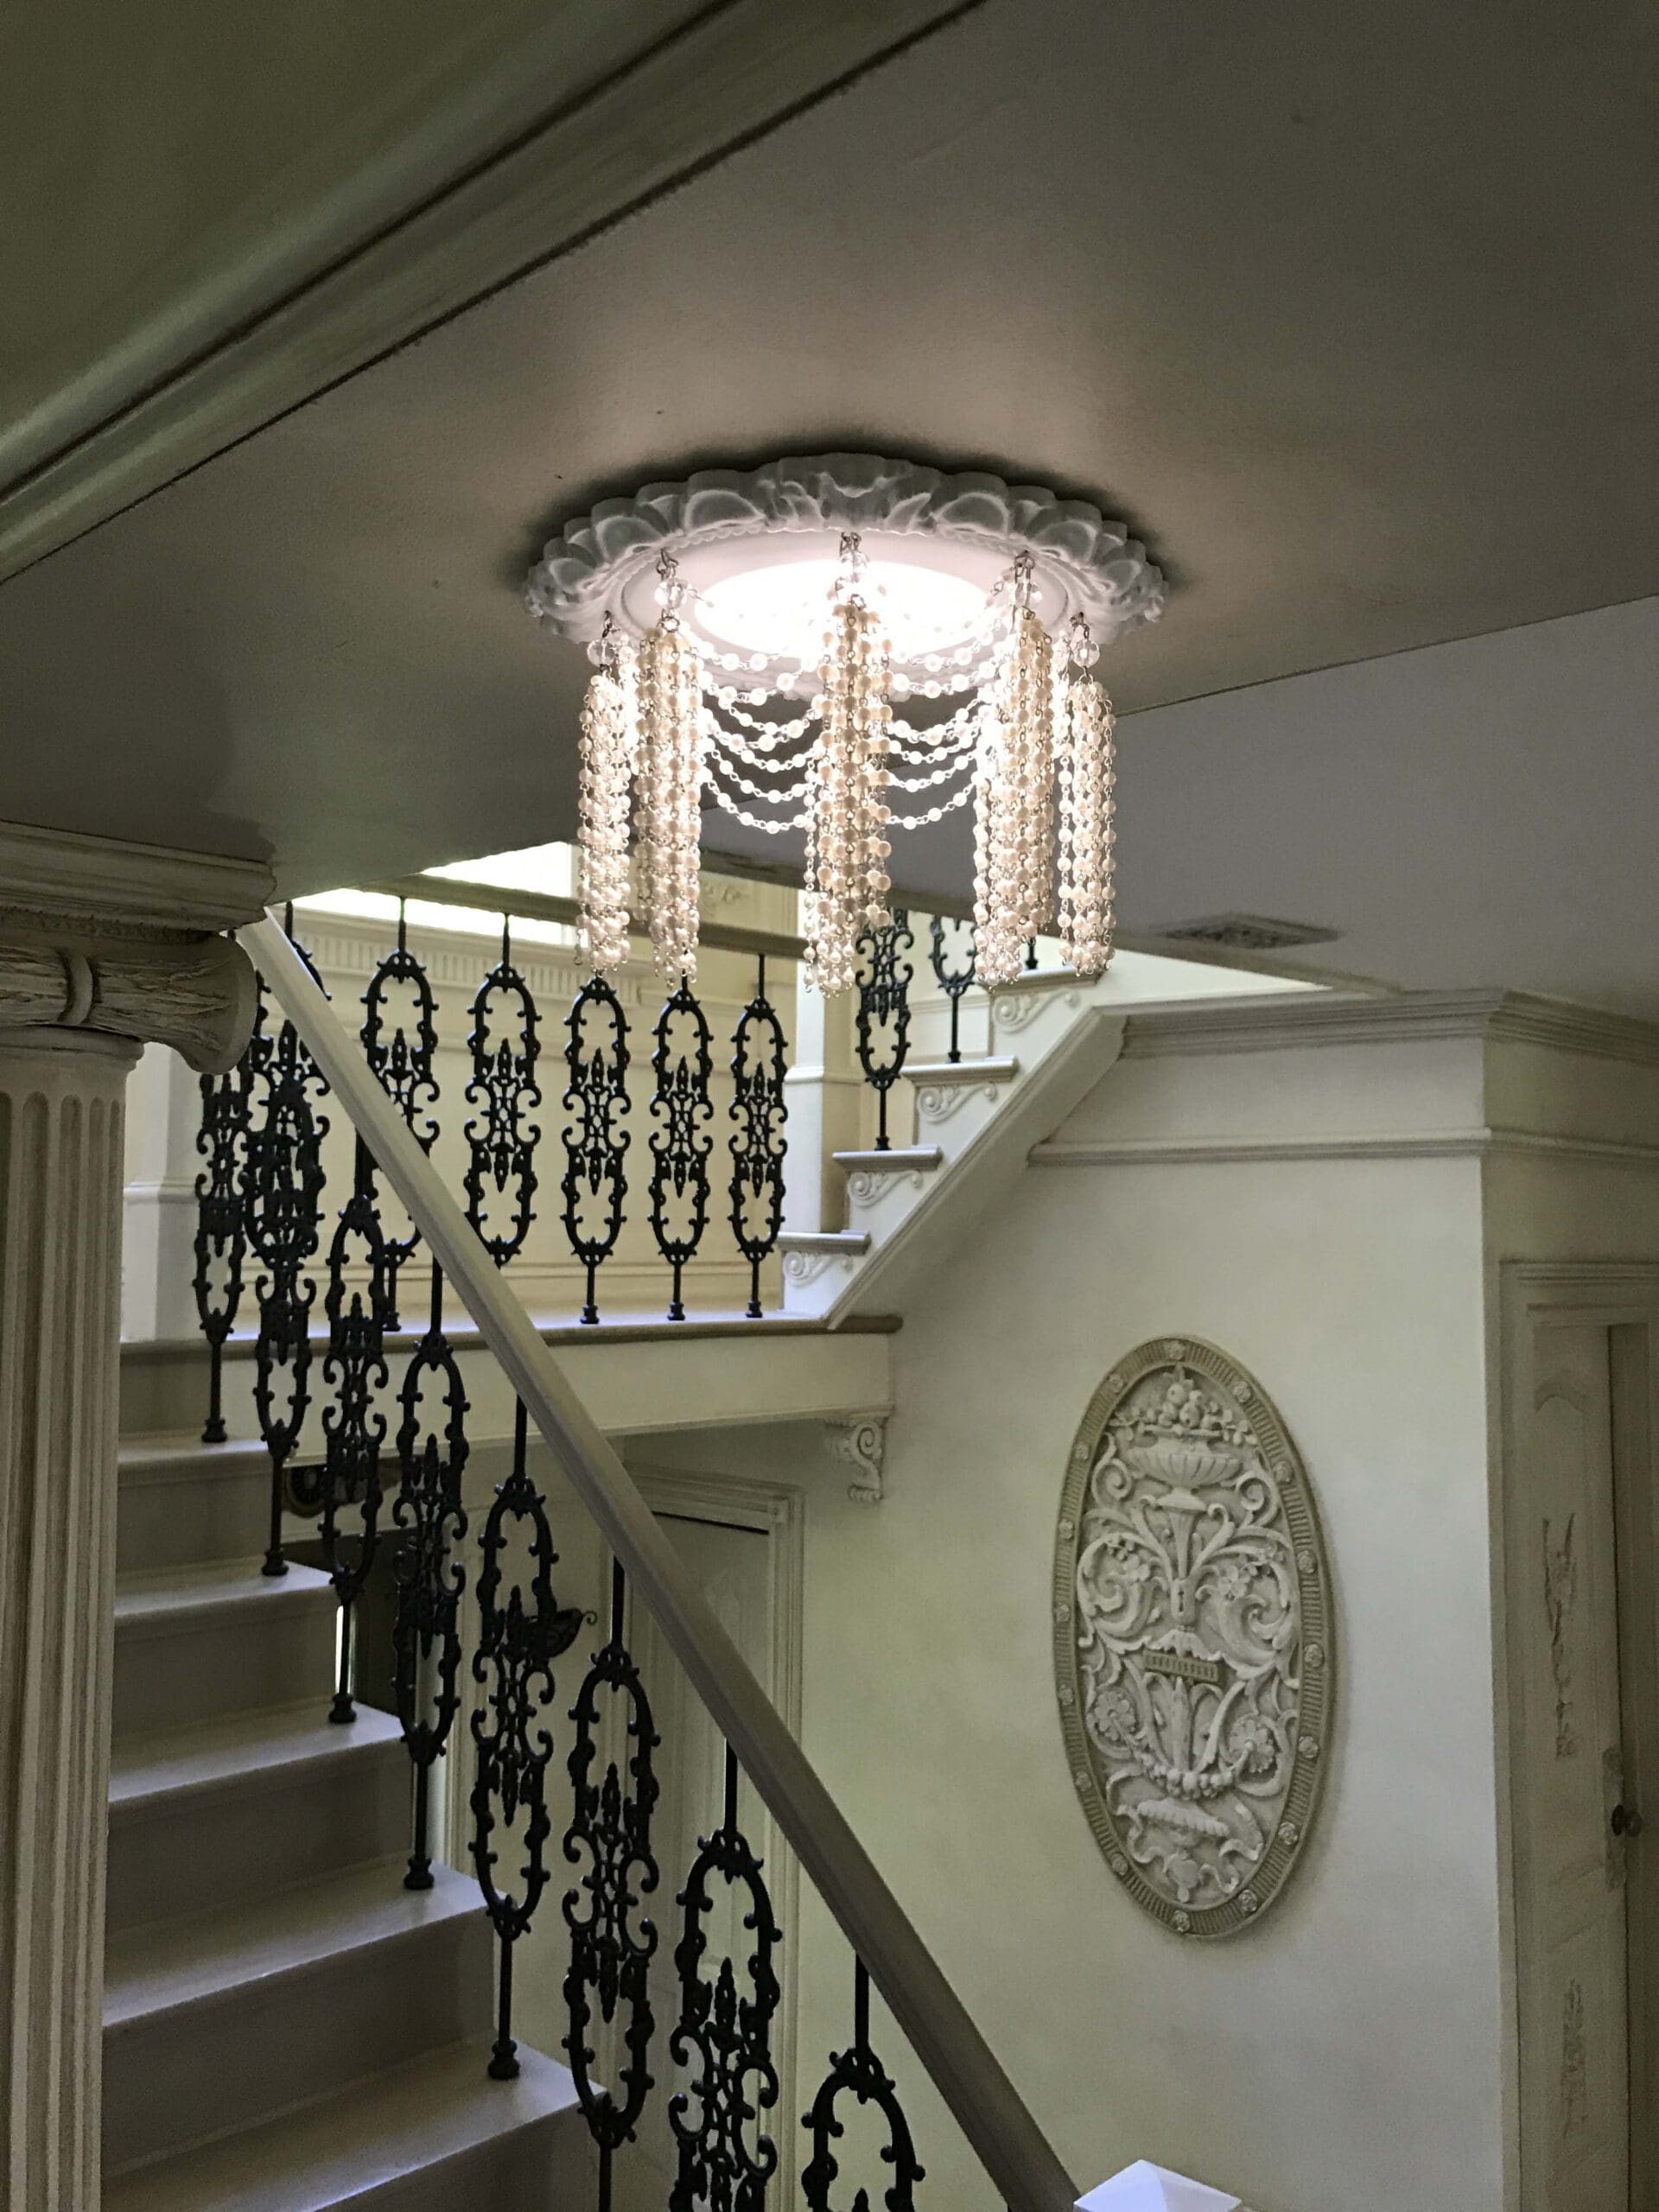 Decorative Recessed Chandelier for stairway.